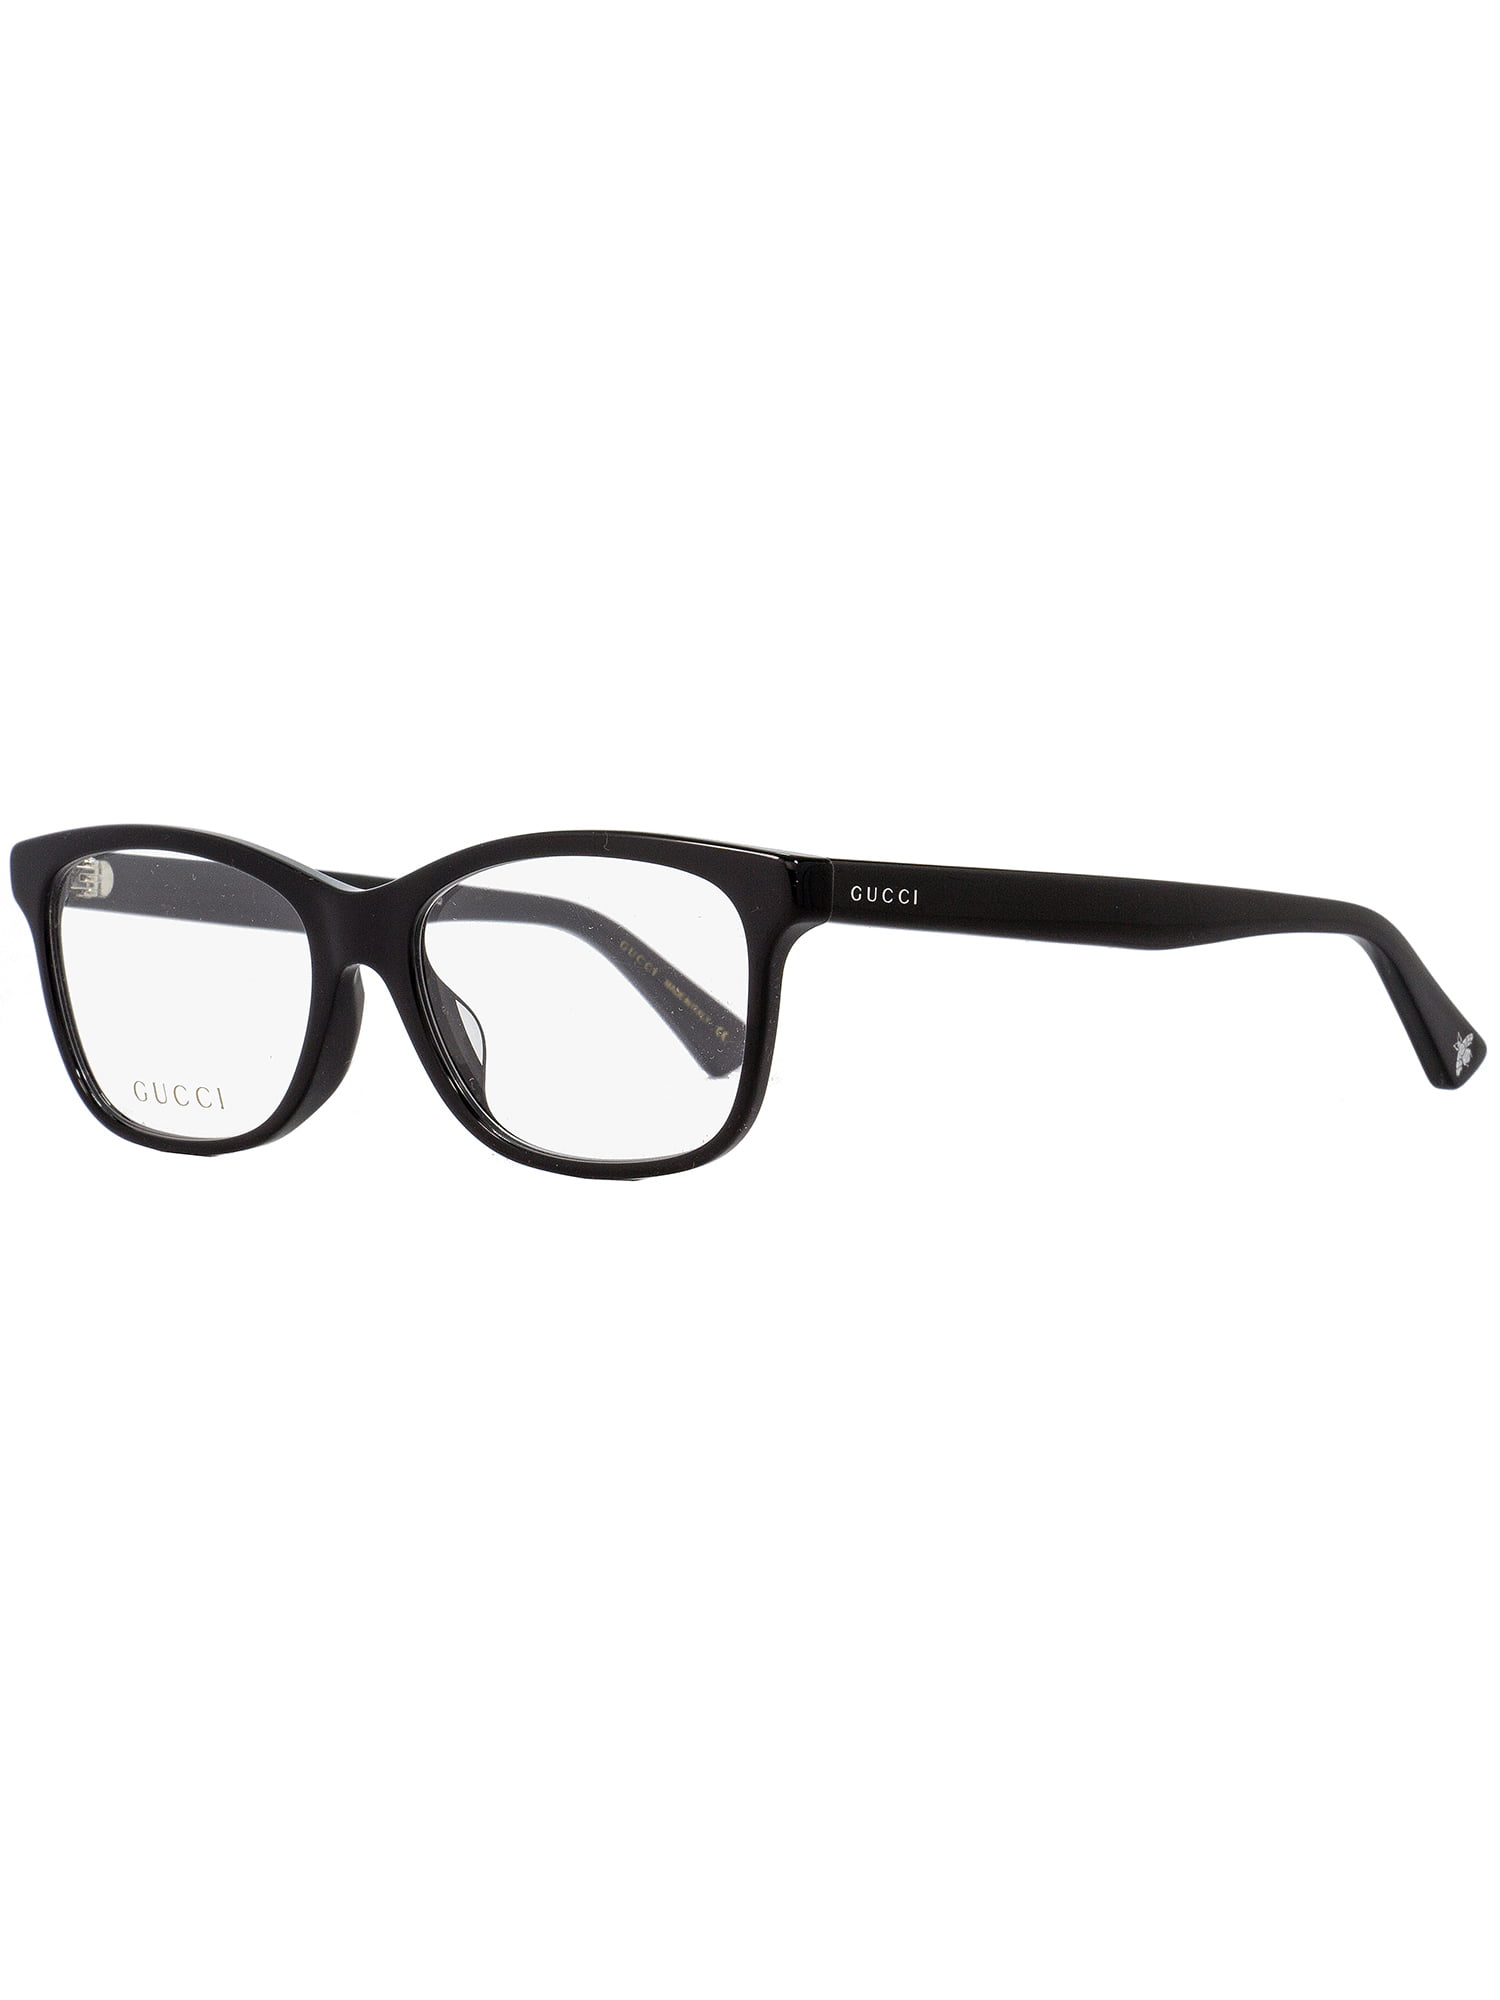 authentic gucci eyeglasses